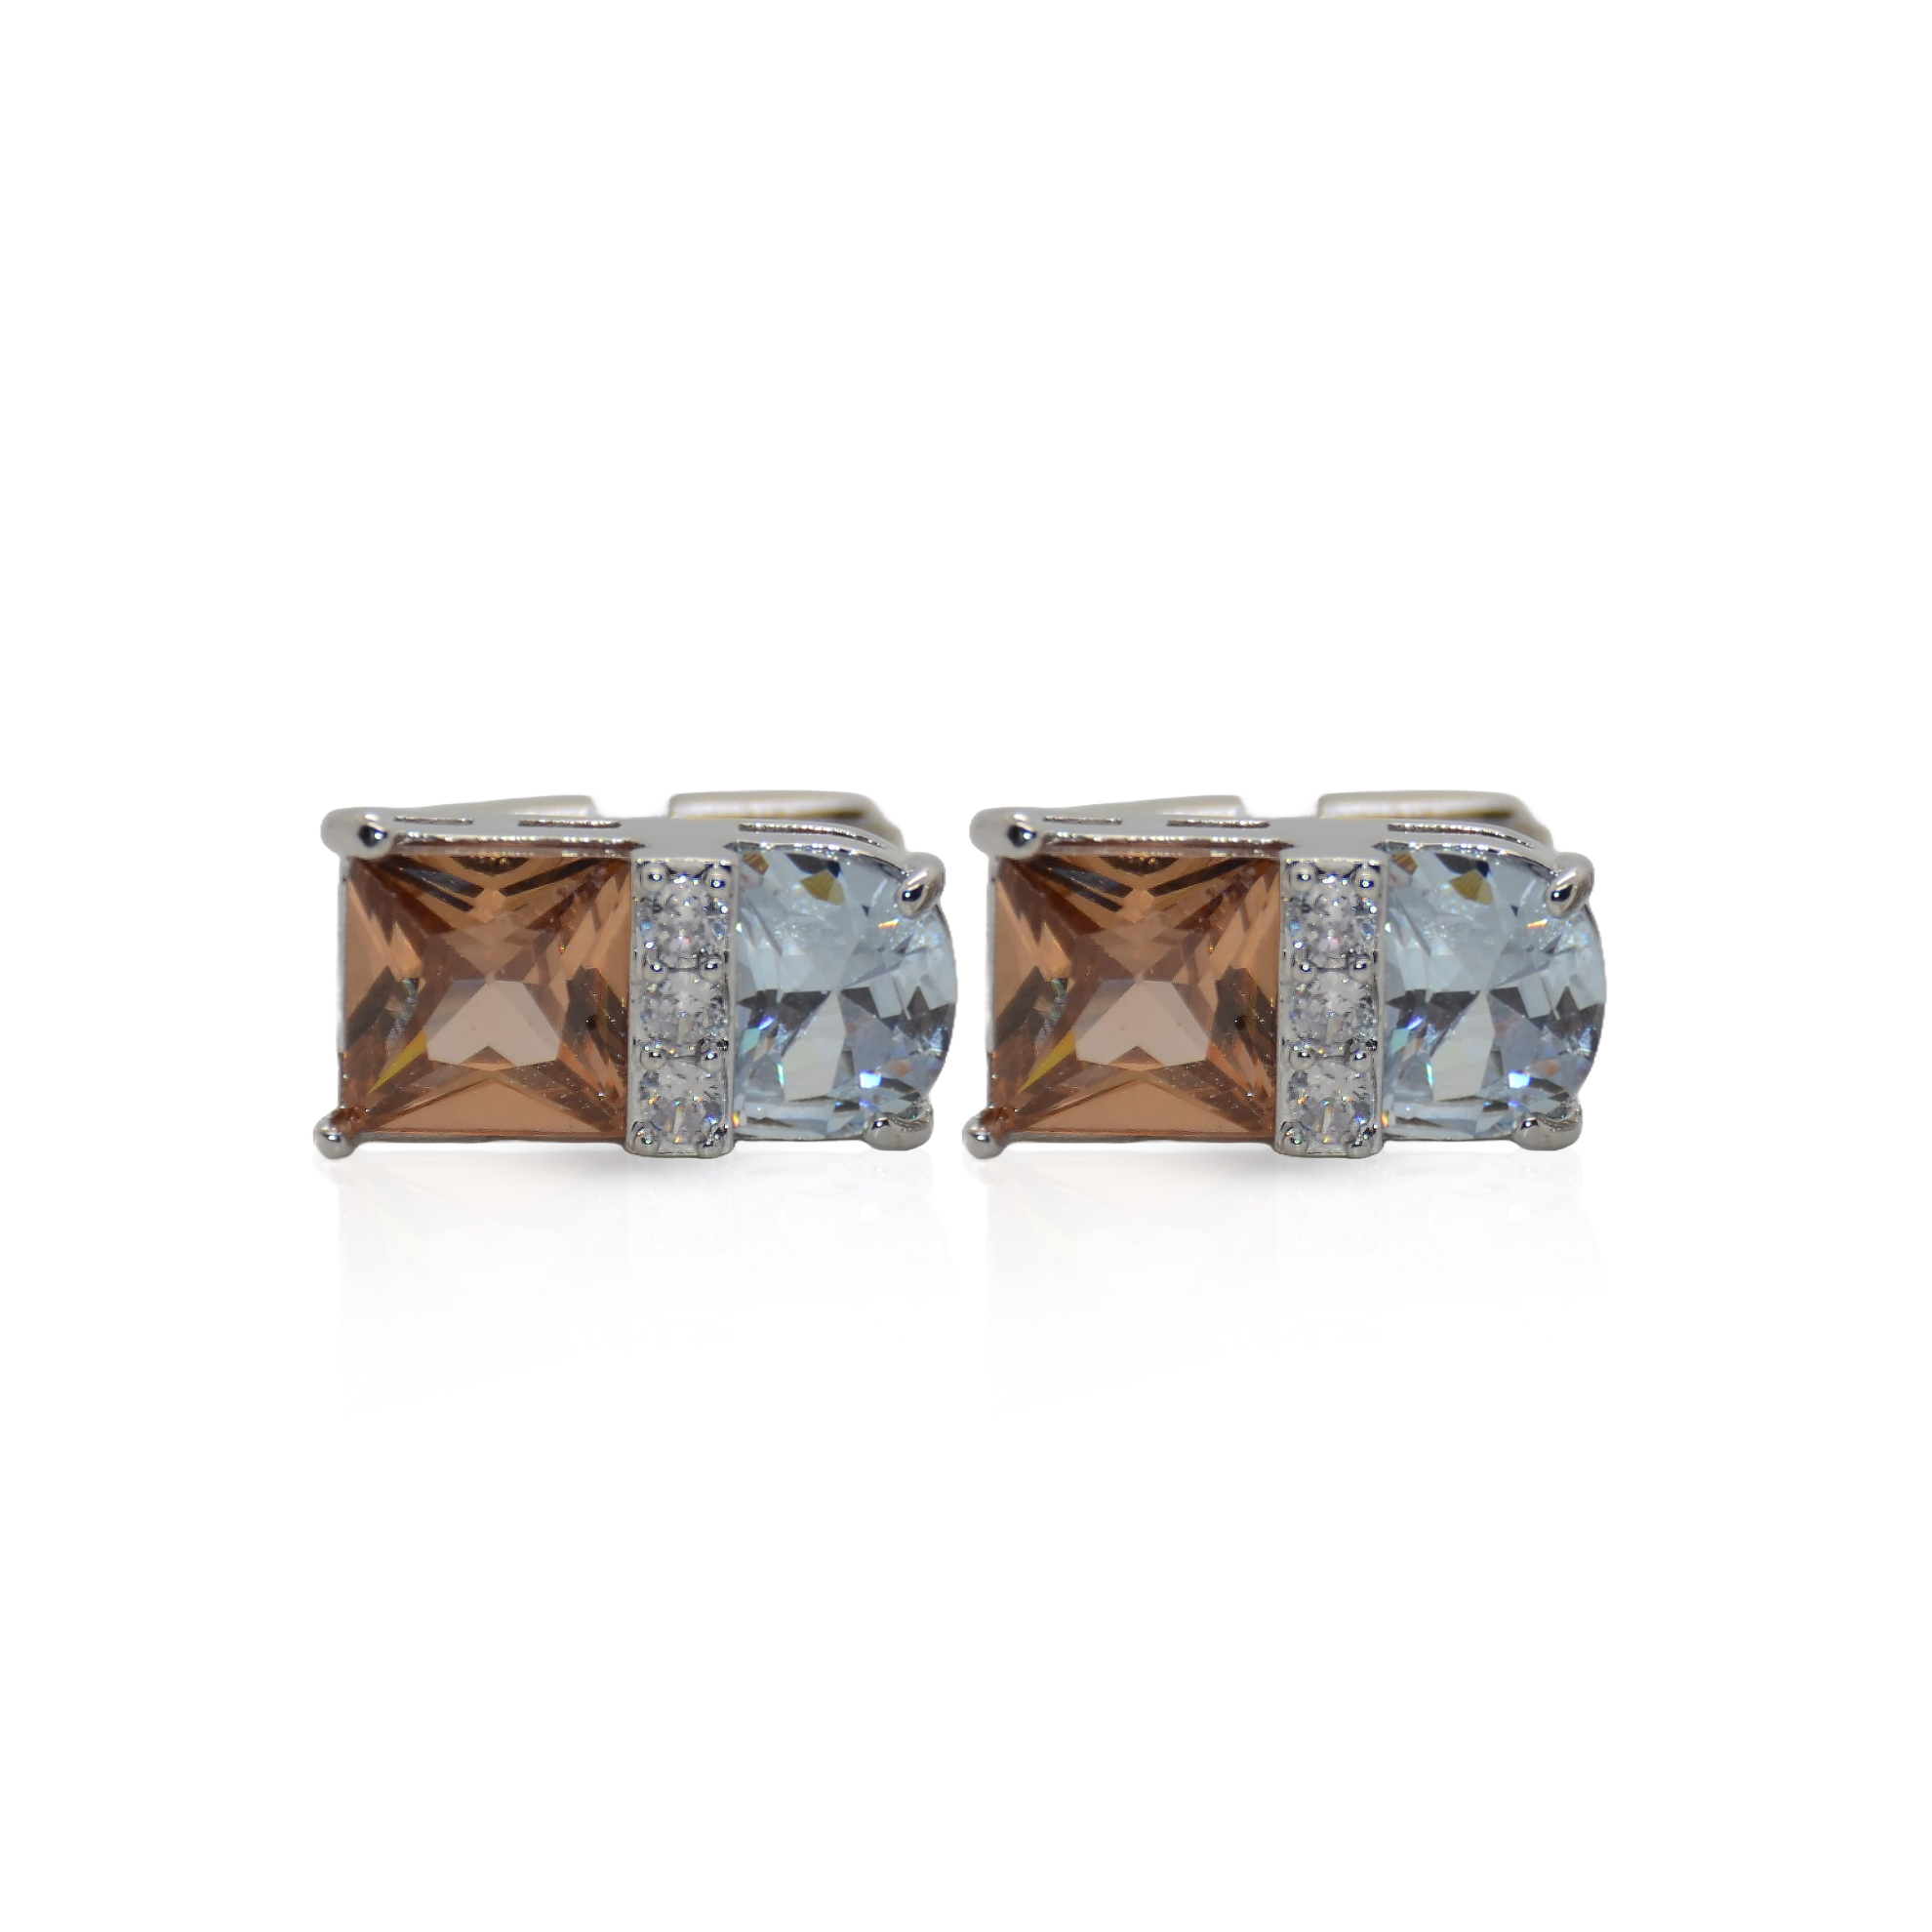 Cufflers Designer Silver Square Gemstone Cufflinks with Free Gift Box – CU-4027